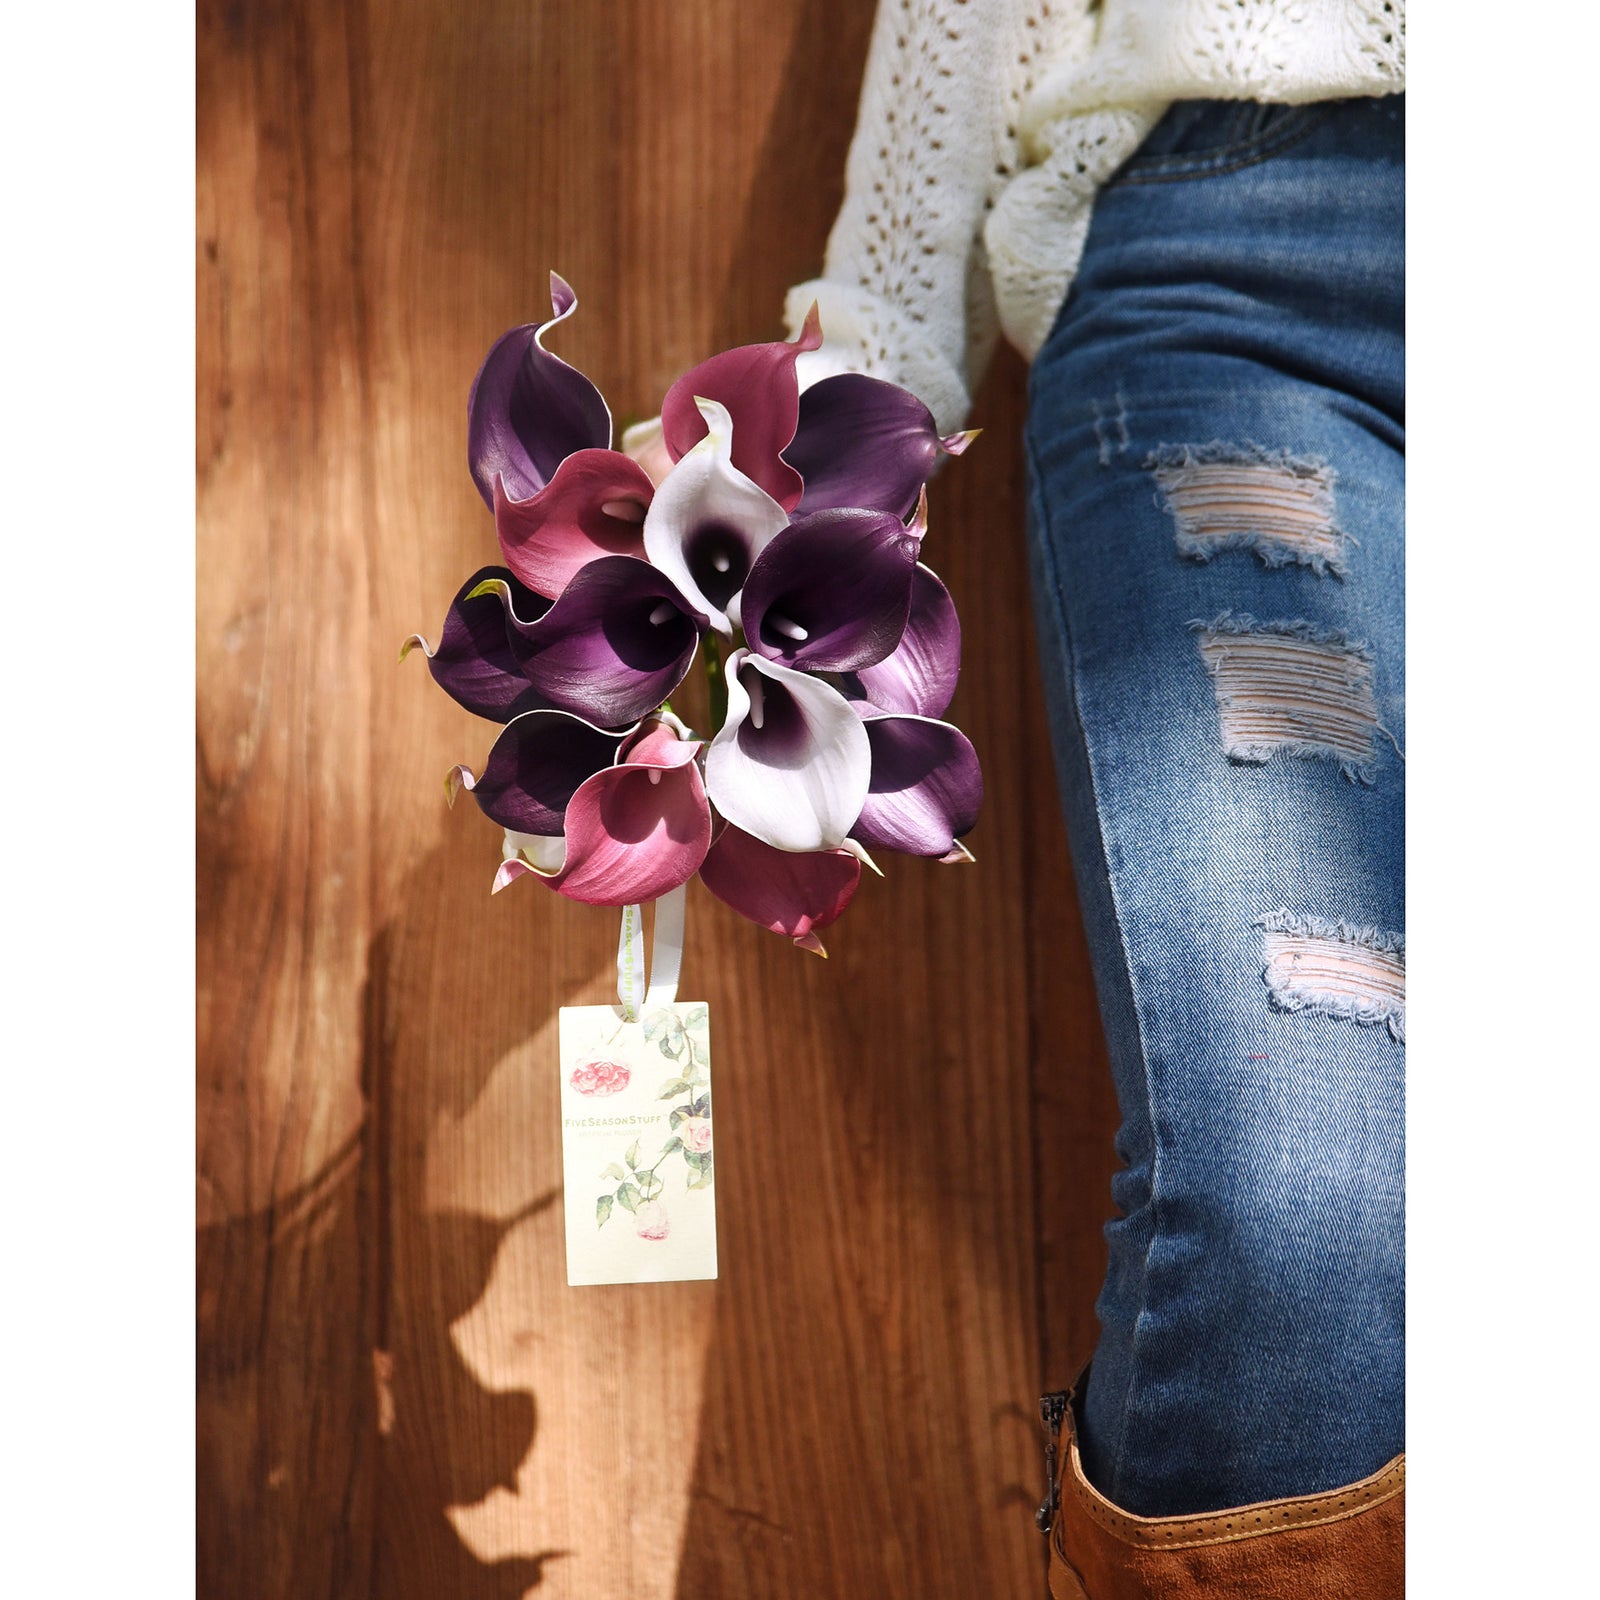 FiveSeasonStuff 15 Stems Real Touch (Joyful Purple Mix) Calla Lilies Artificial Flower Bouquet, Wedding, Bridal, Party, Home Décor DIY